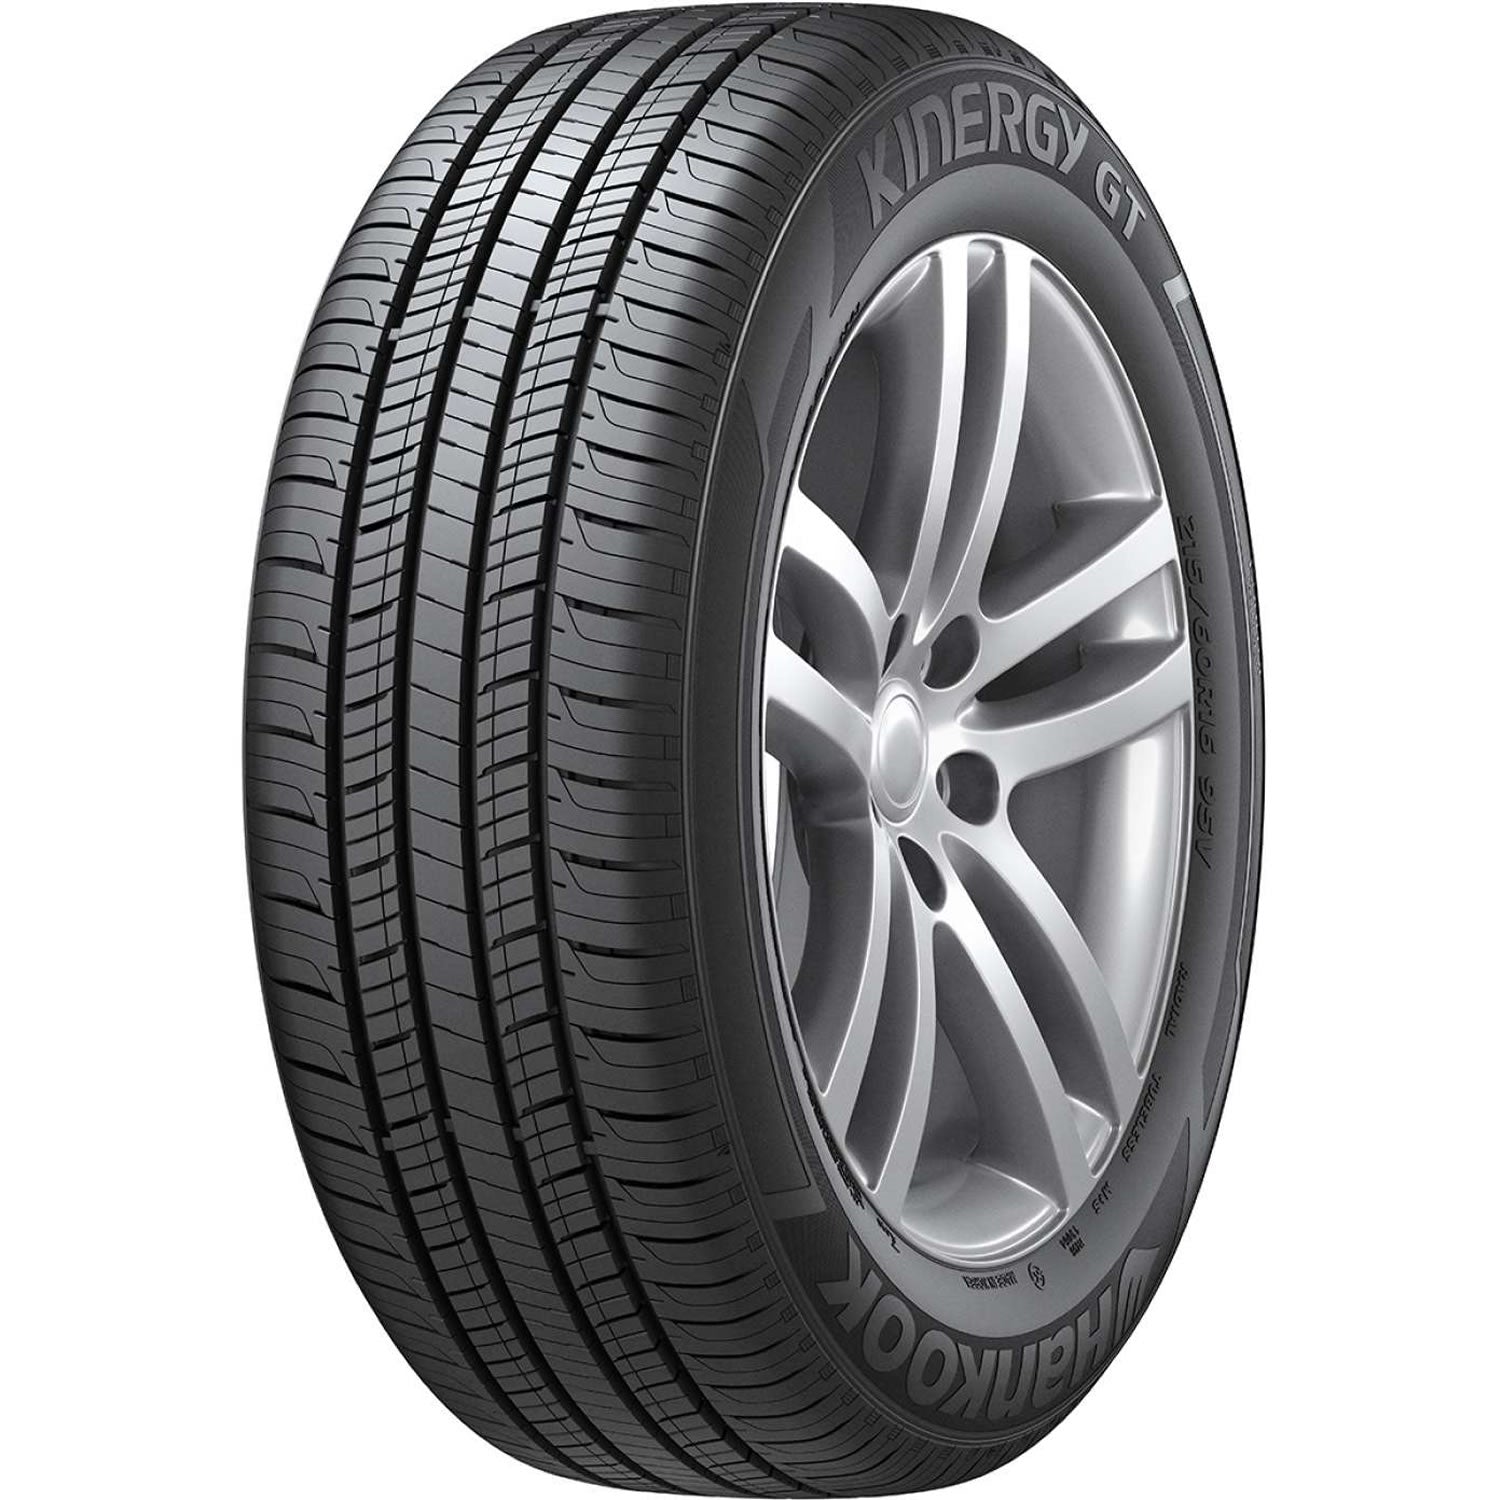 HANKOOK KINERGY GT 195/60R16 (25.1X7.7R 16) Tires